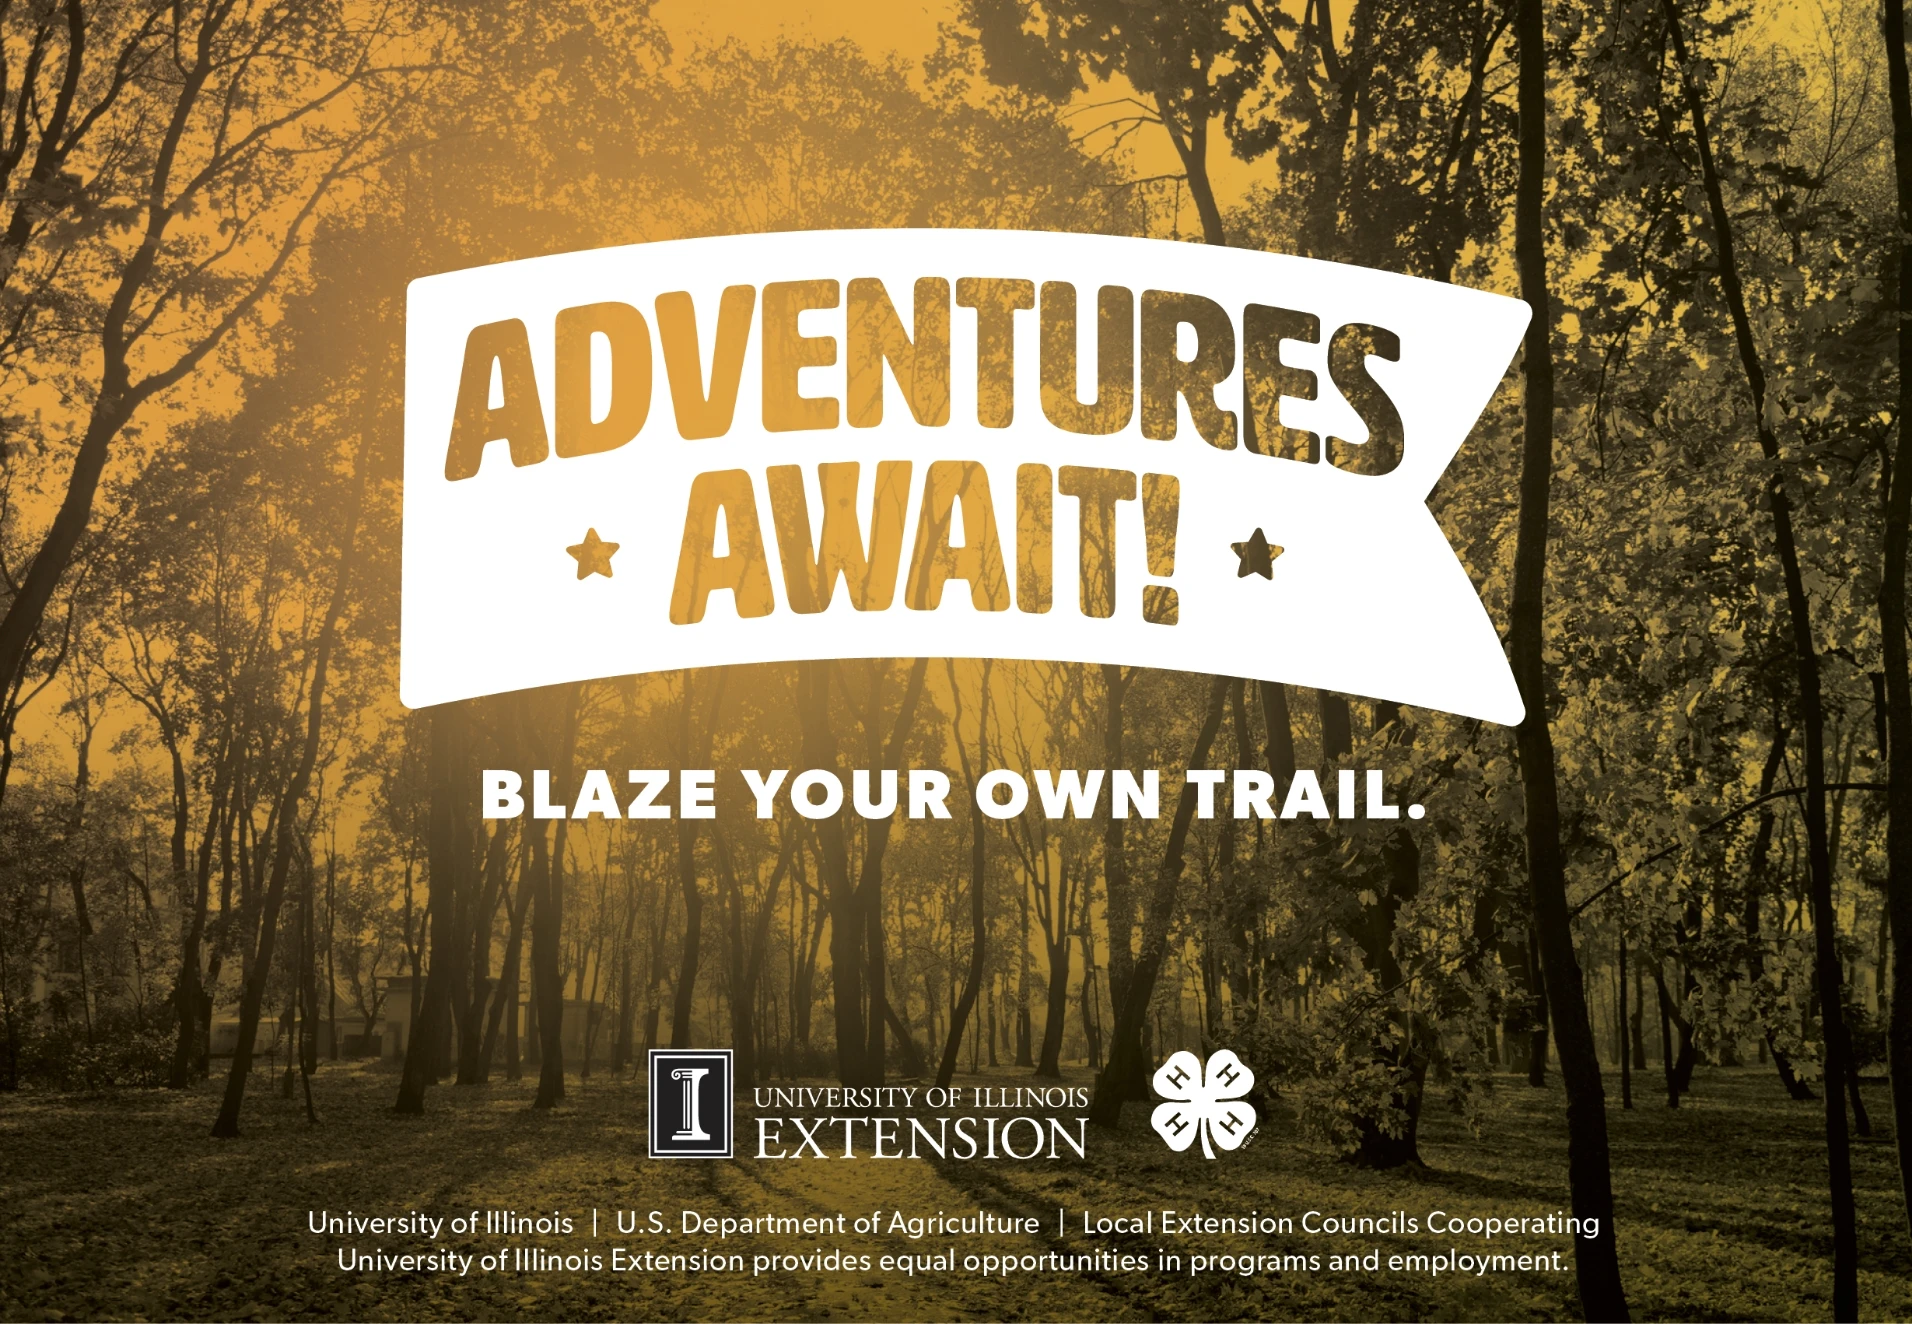 Adventures await blaze your own trail.